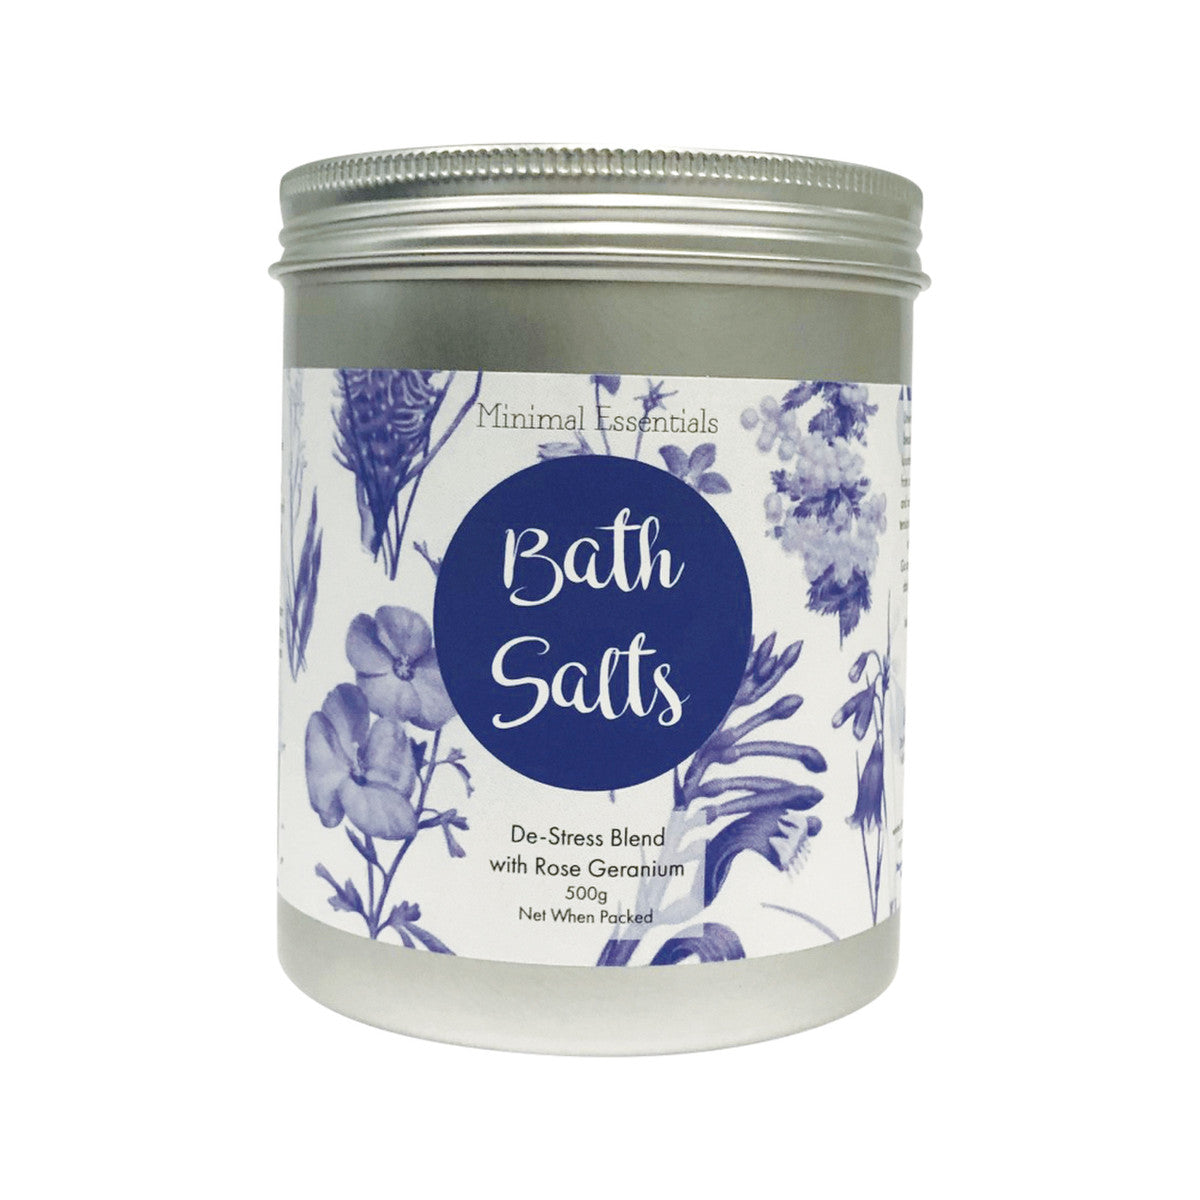 Minimal Essentials - Bath Salts De-Stress Blend with Rose Geranium